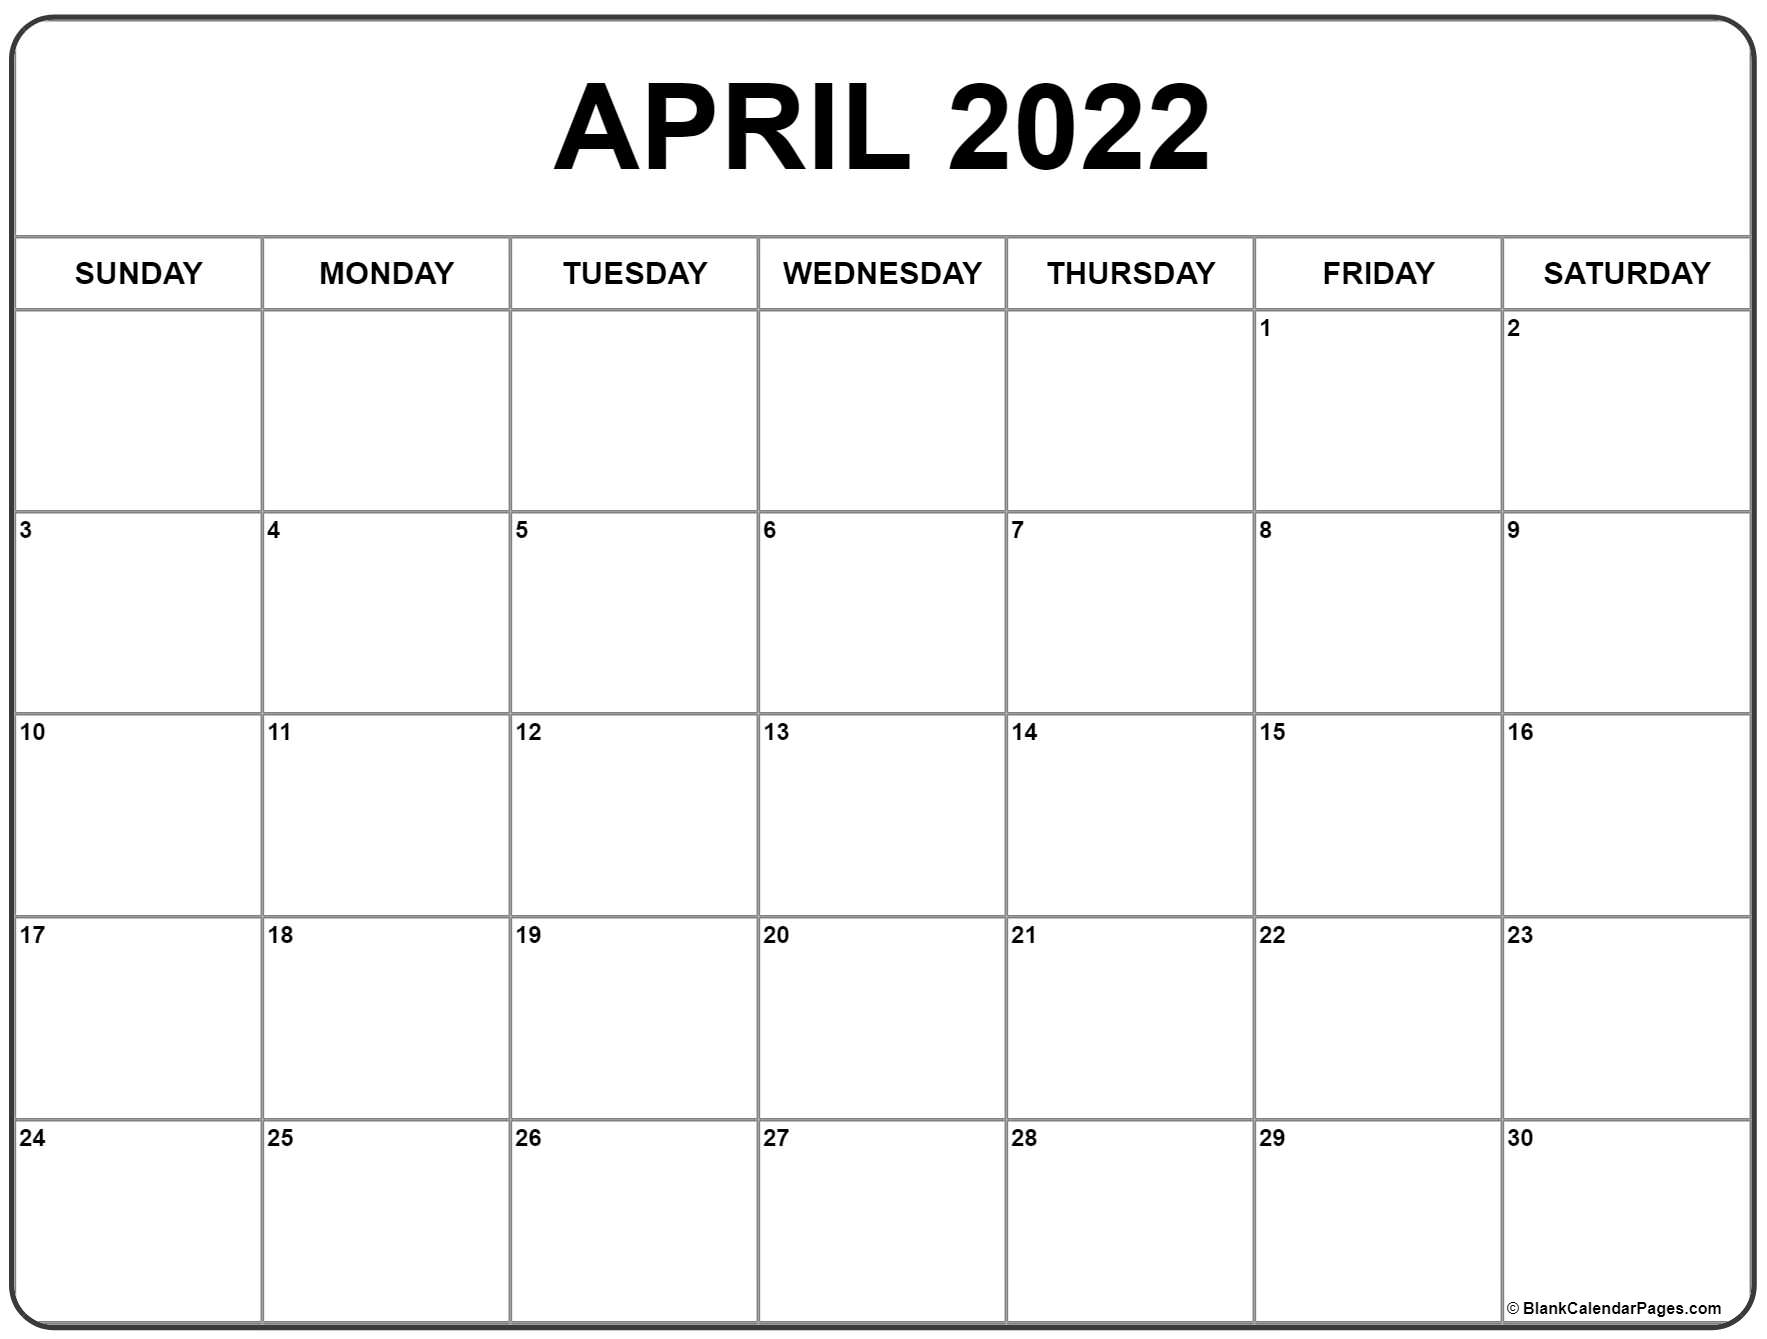 Get Calendar Page For April 2022